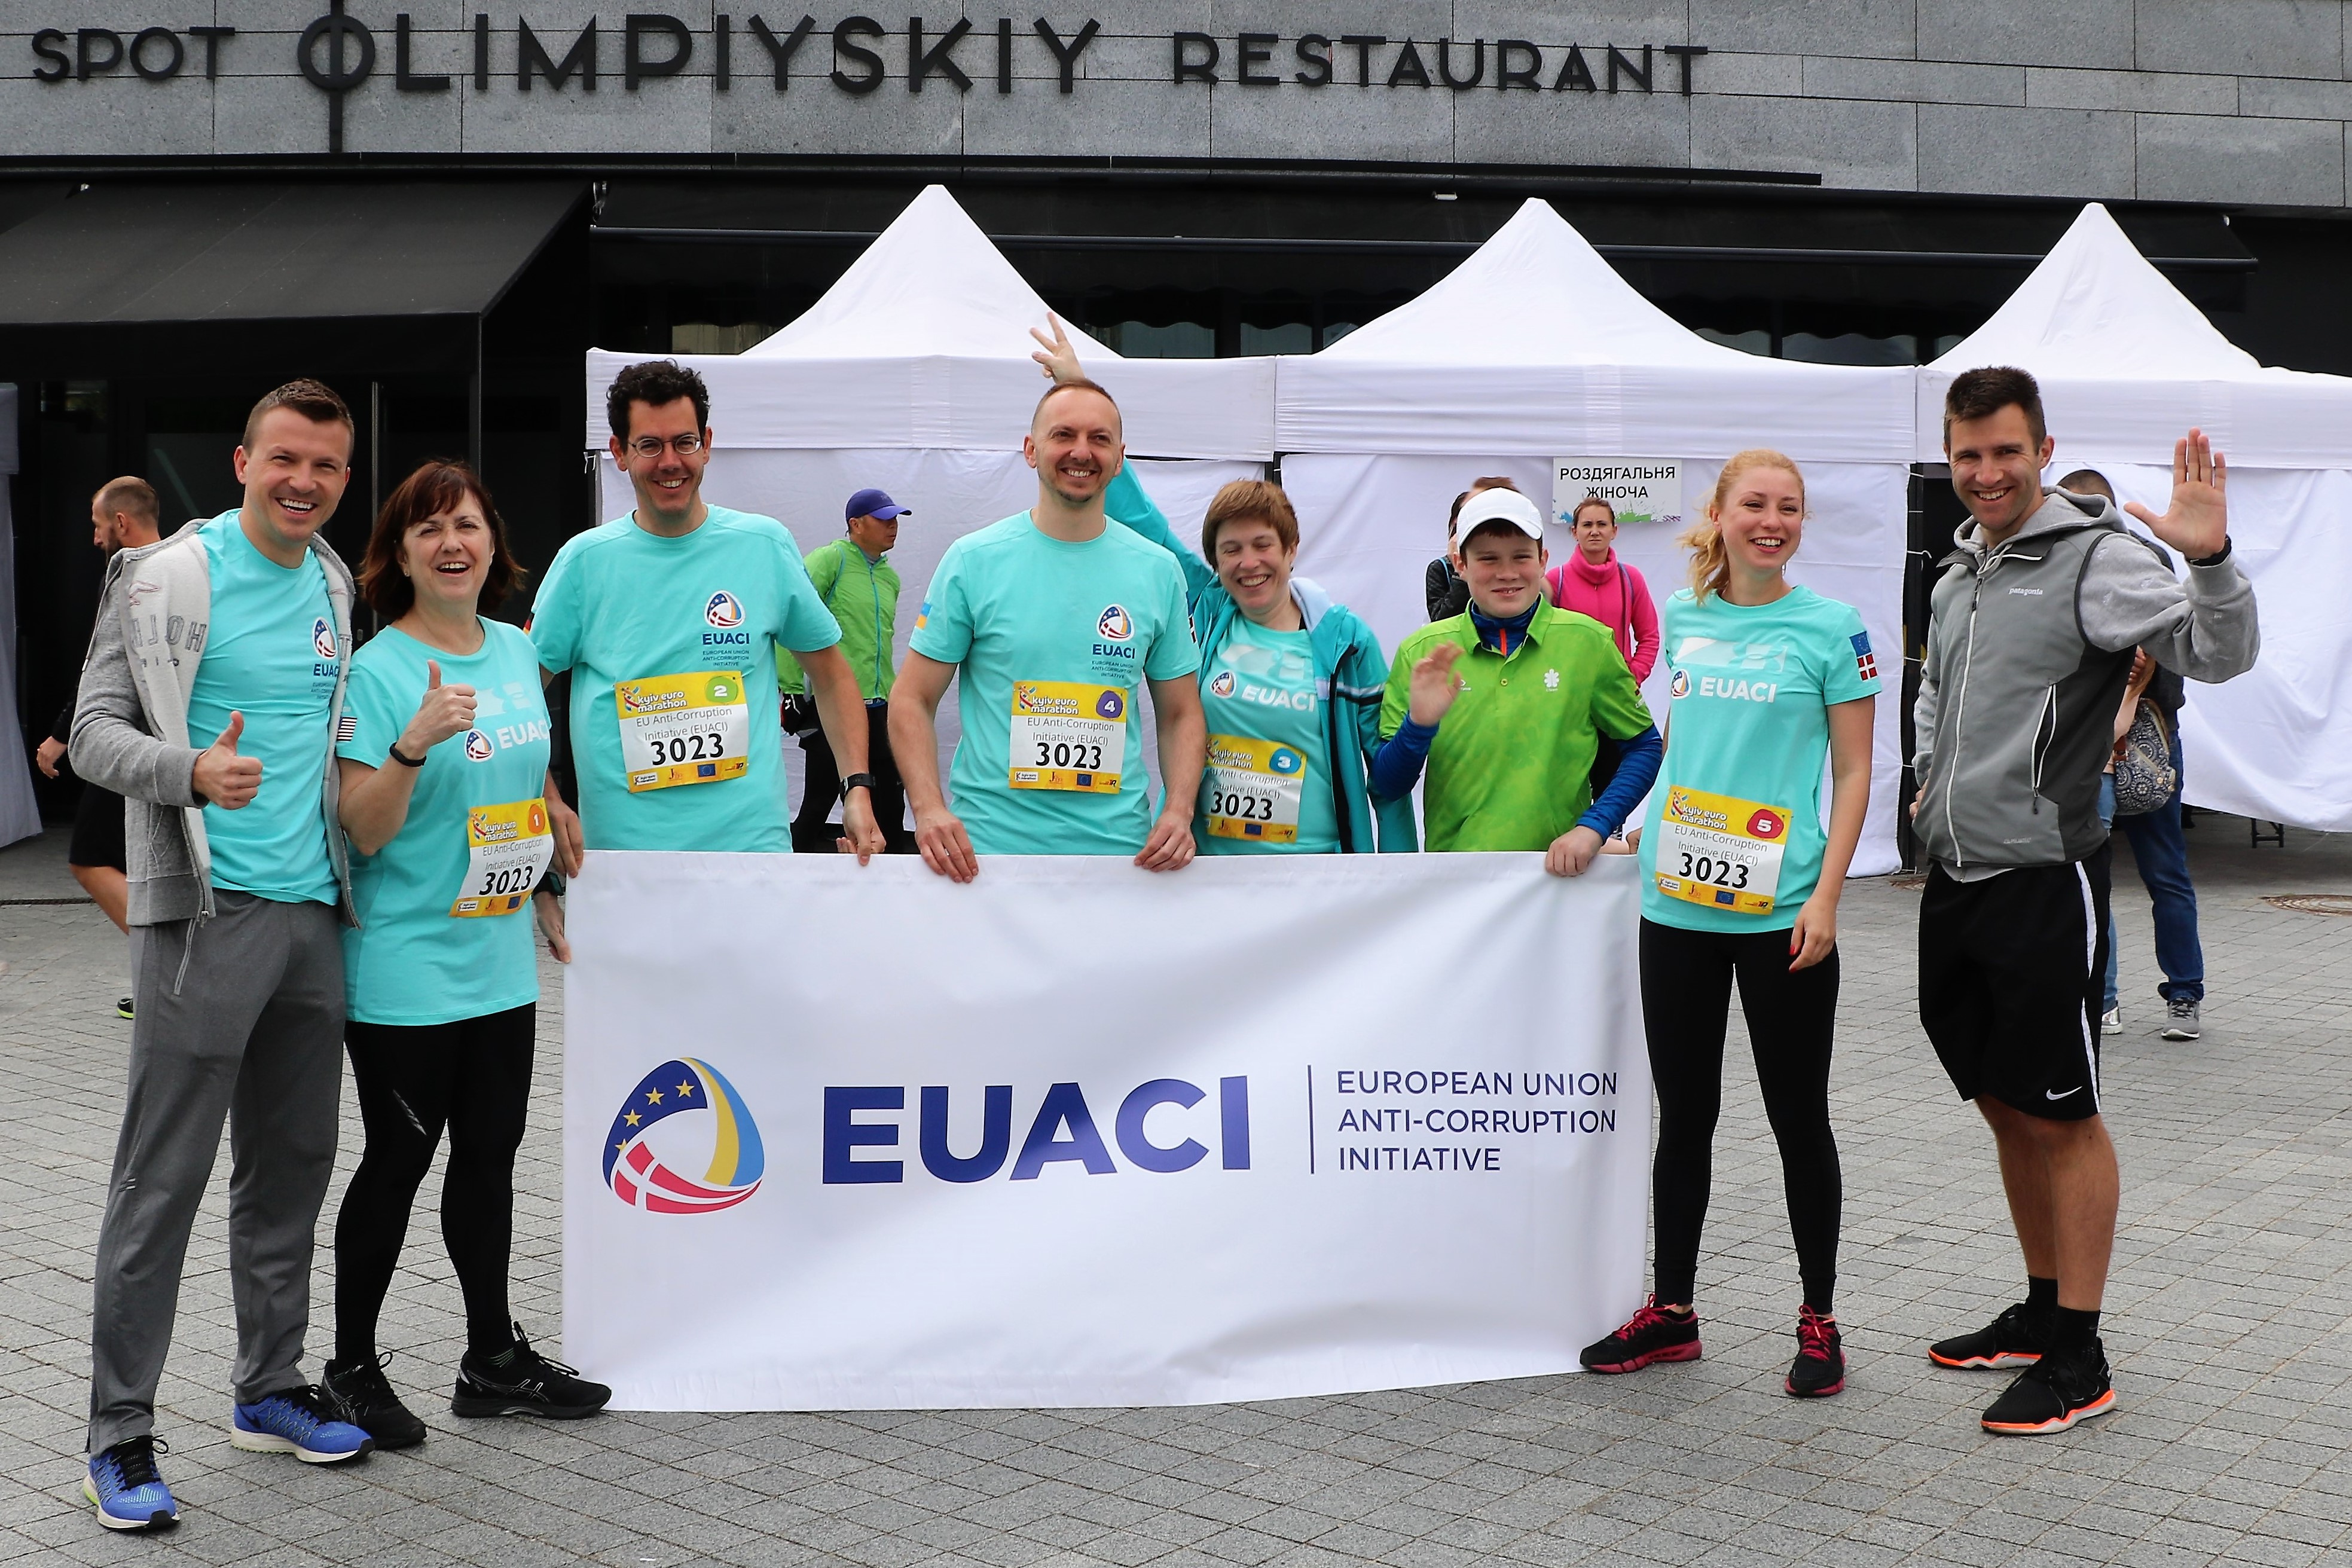 EUACI team ran Kyiv Euro-marathon